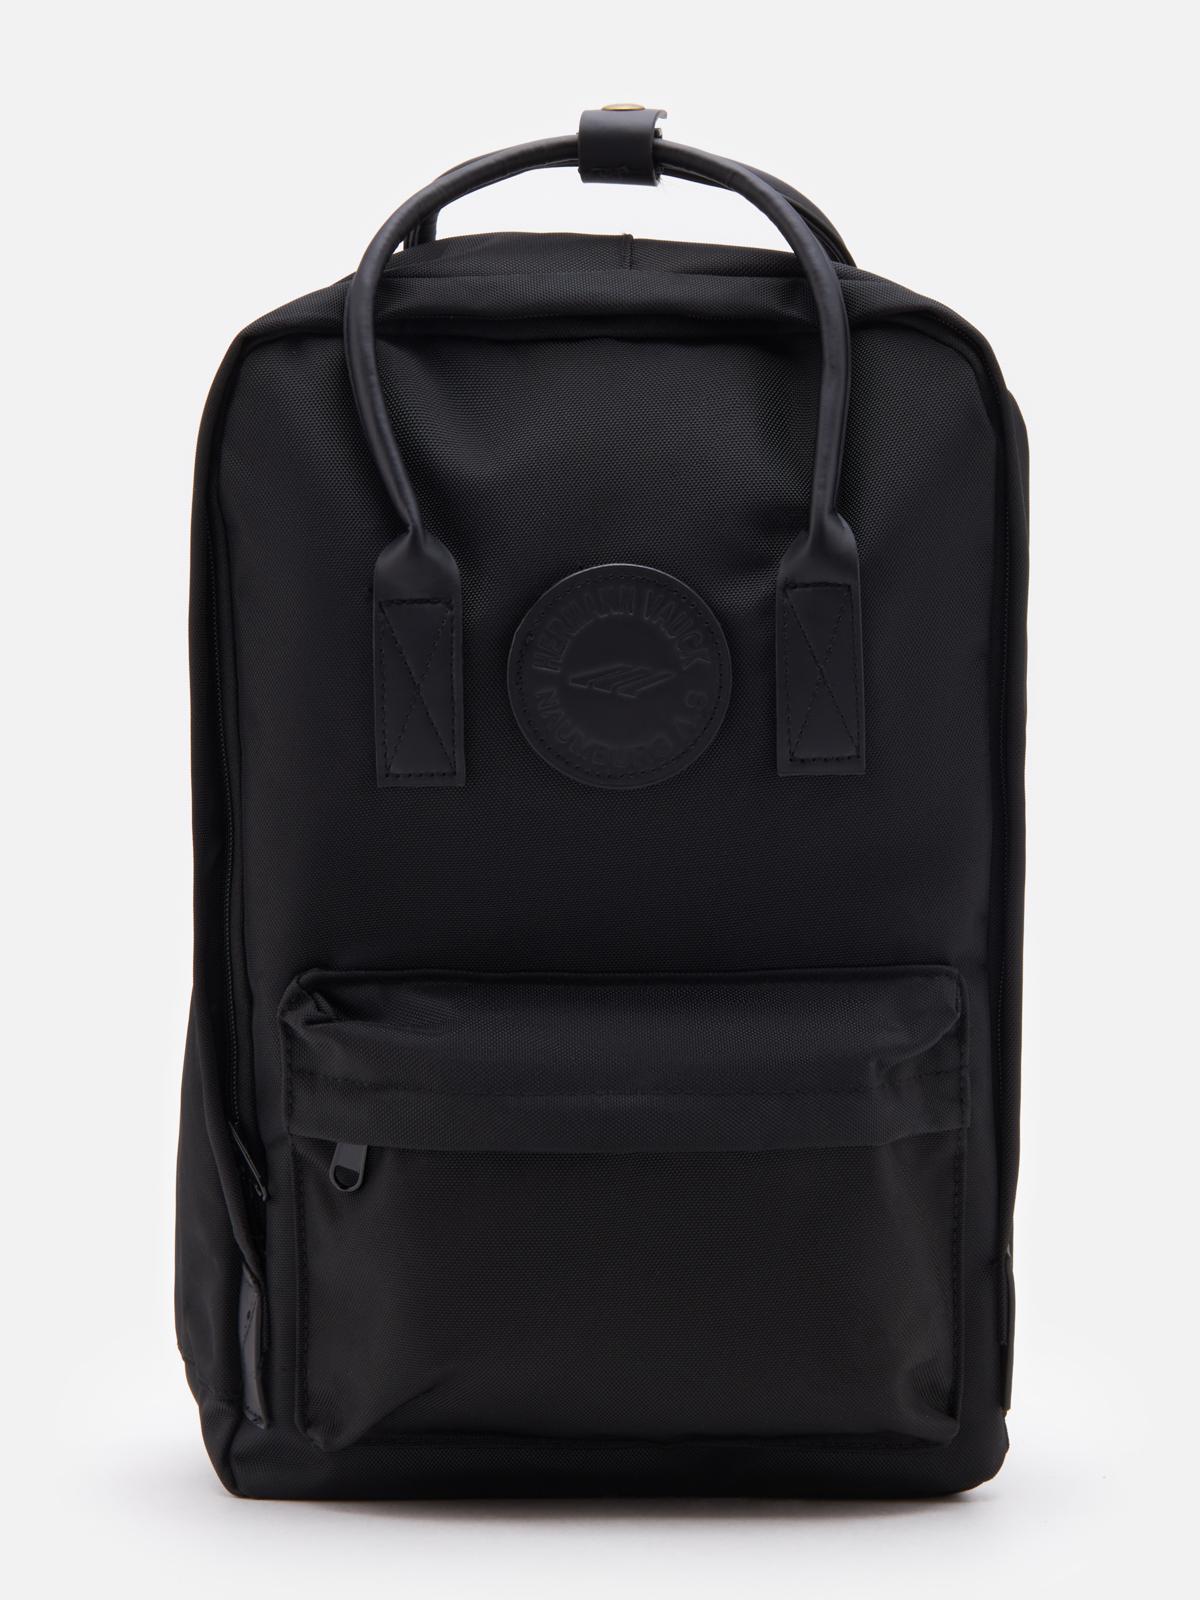 Рюкзак Hermann Vauck для мужчин, чёрный, 27x13x38 см